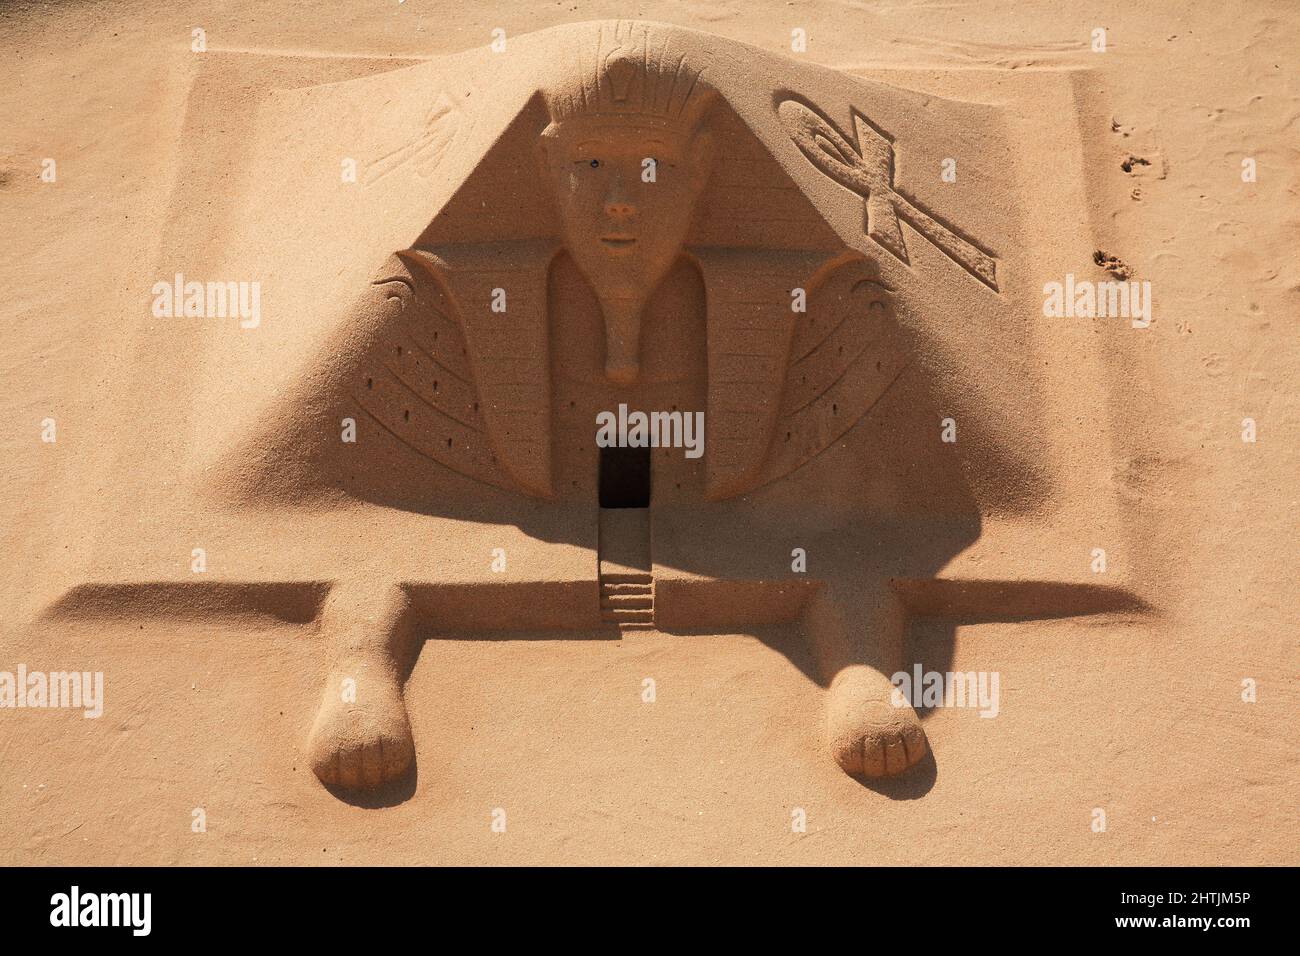 Skulptur aus Sand, Sandkunst, ägyptisches Motiv Foto Stock